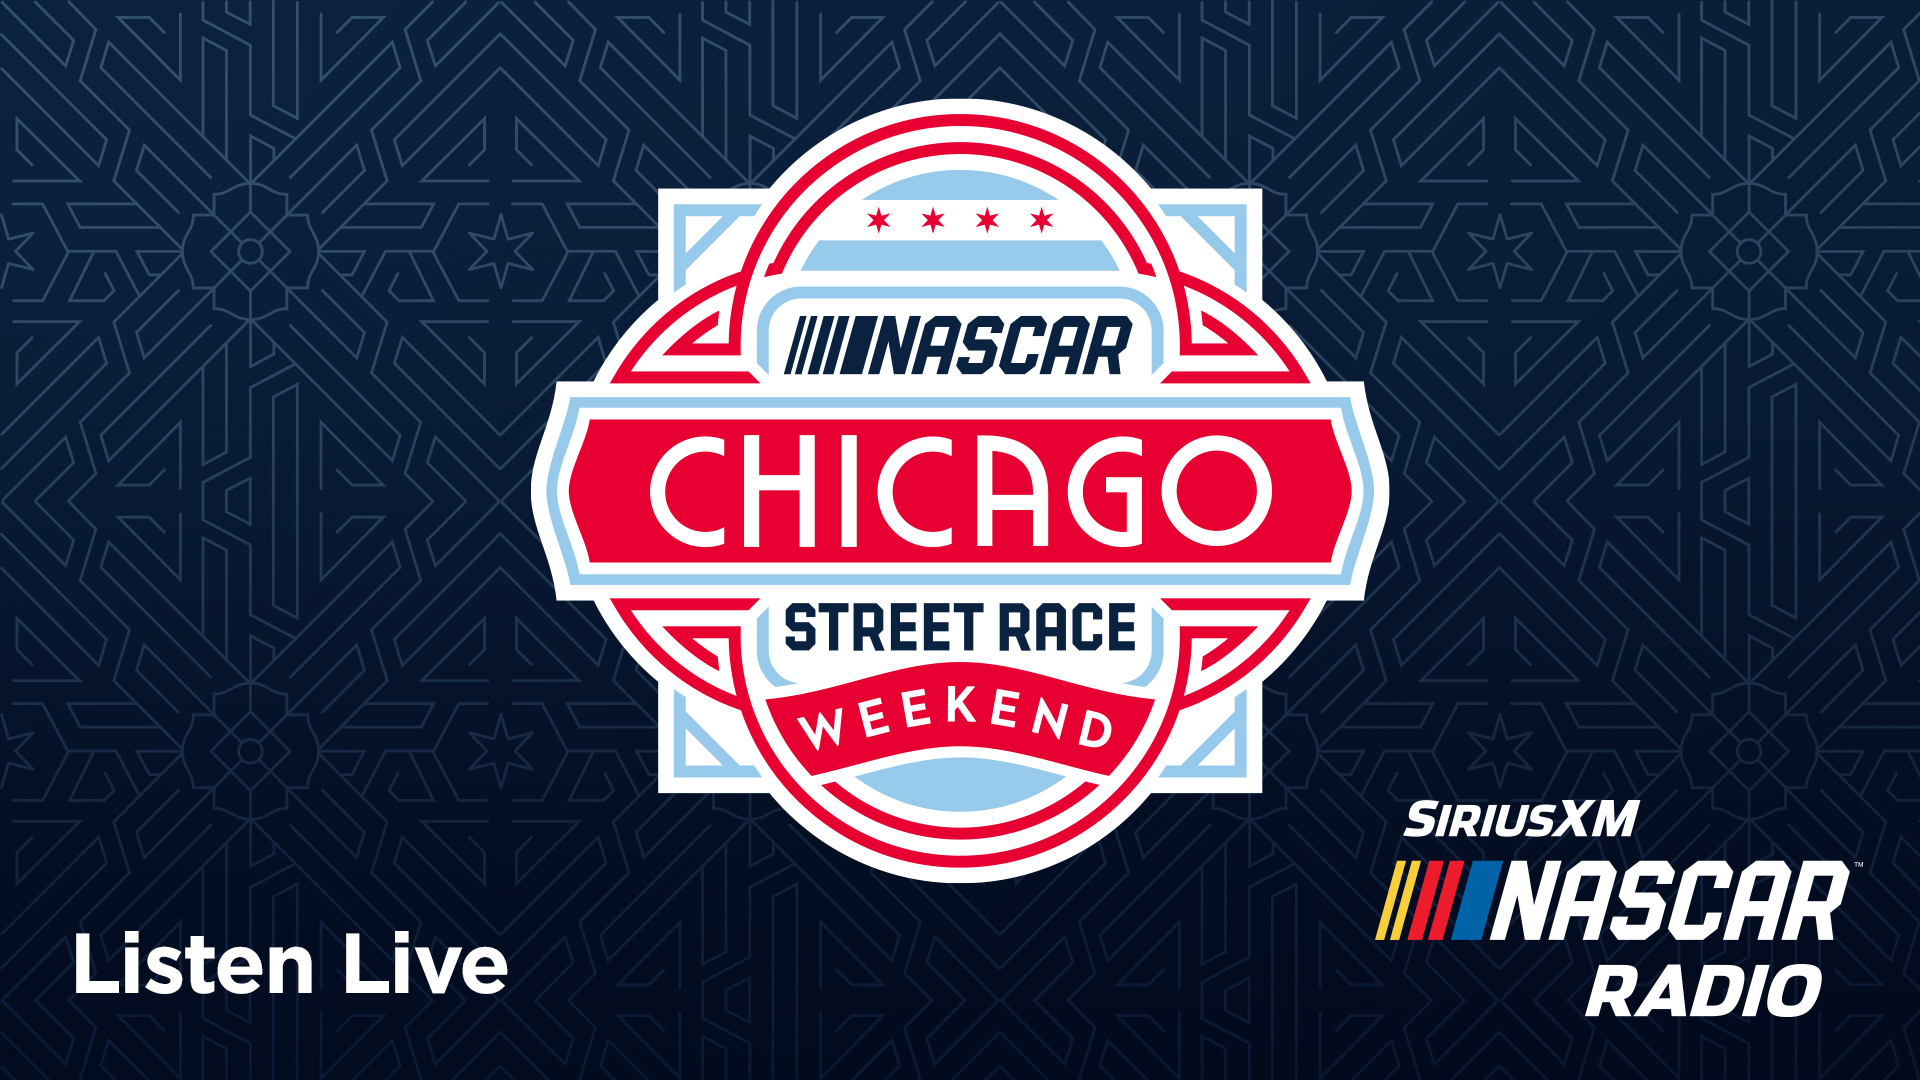 NASCAR Chicago Street Race